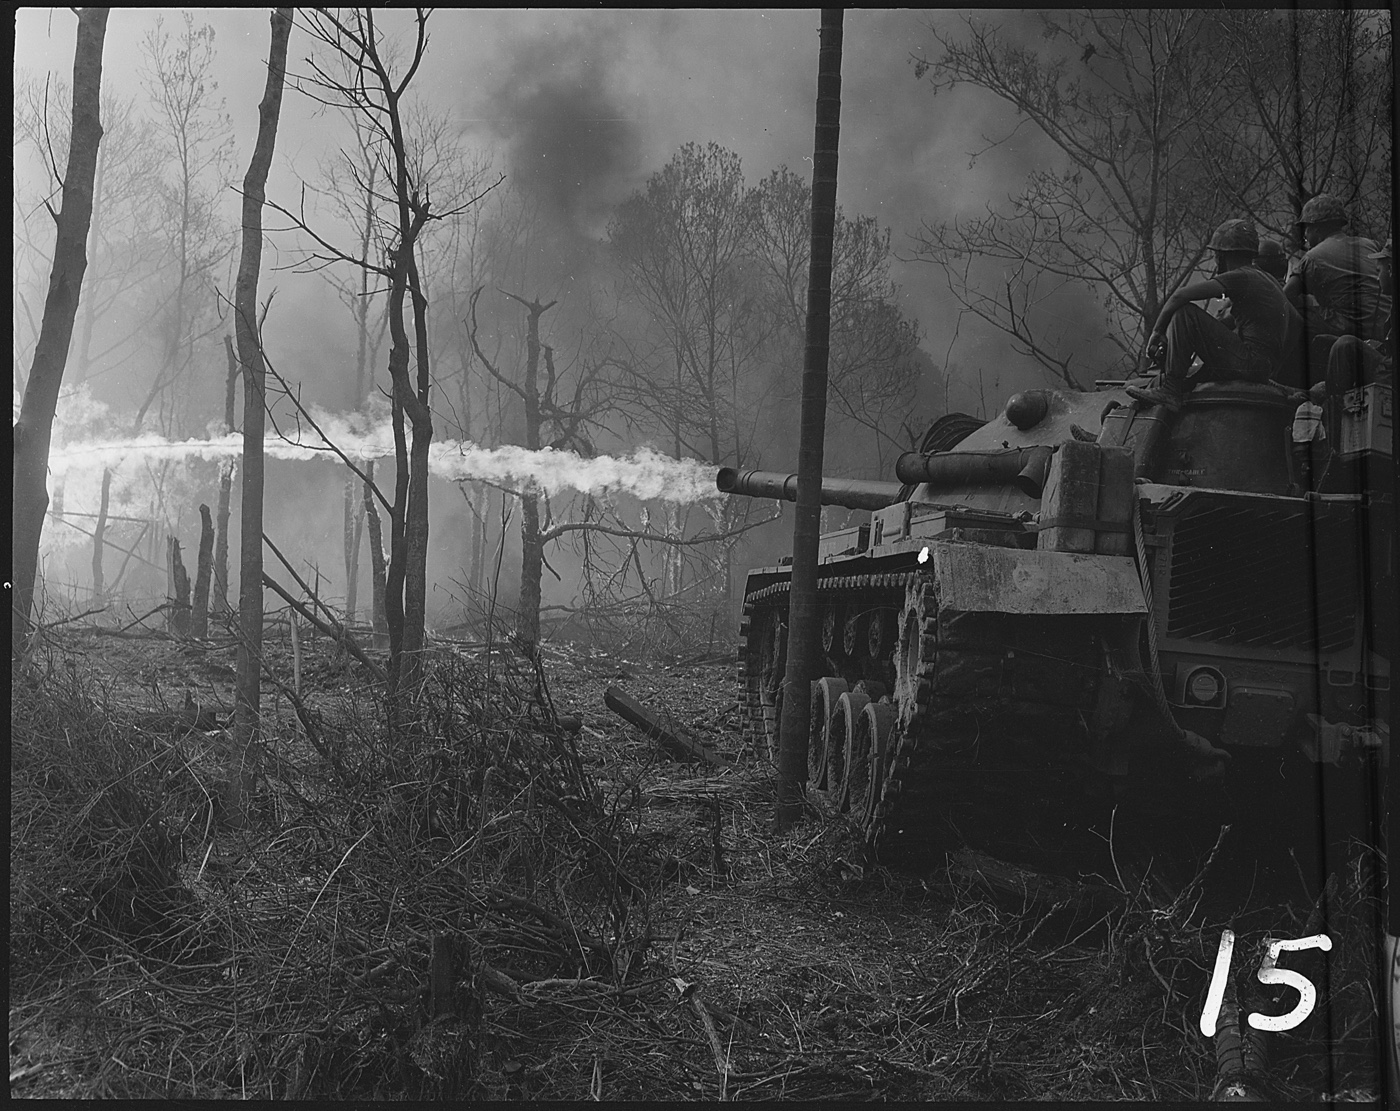 american flame tank in the vietnam war